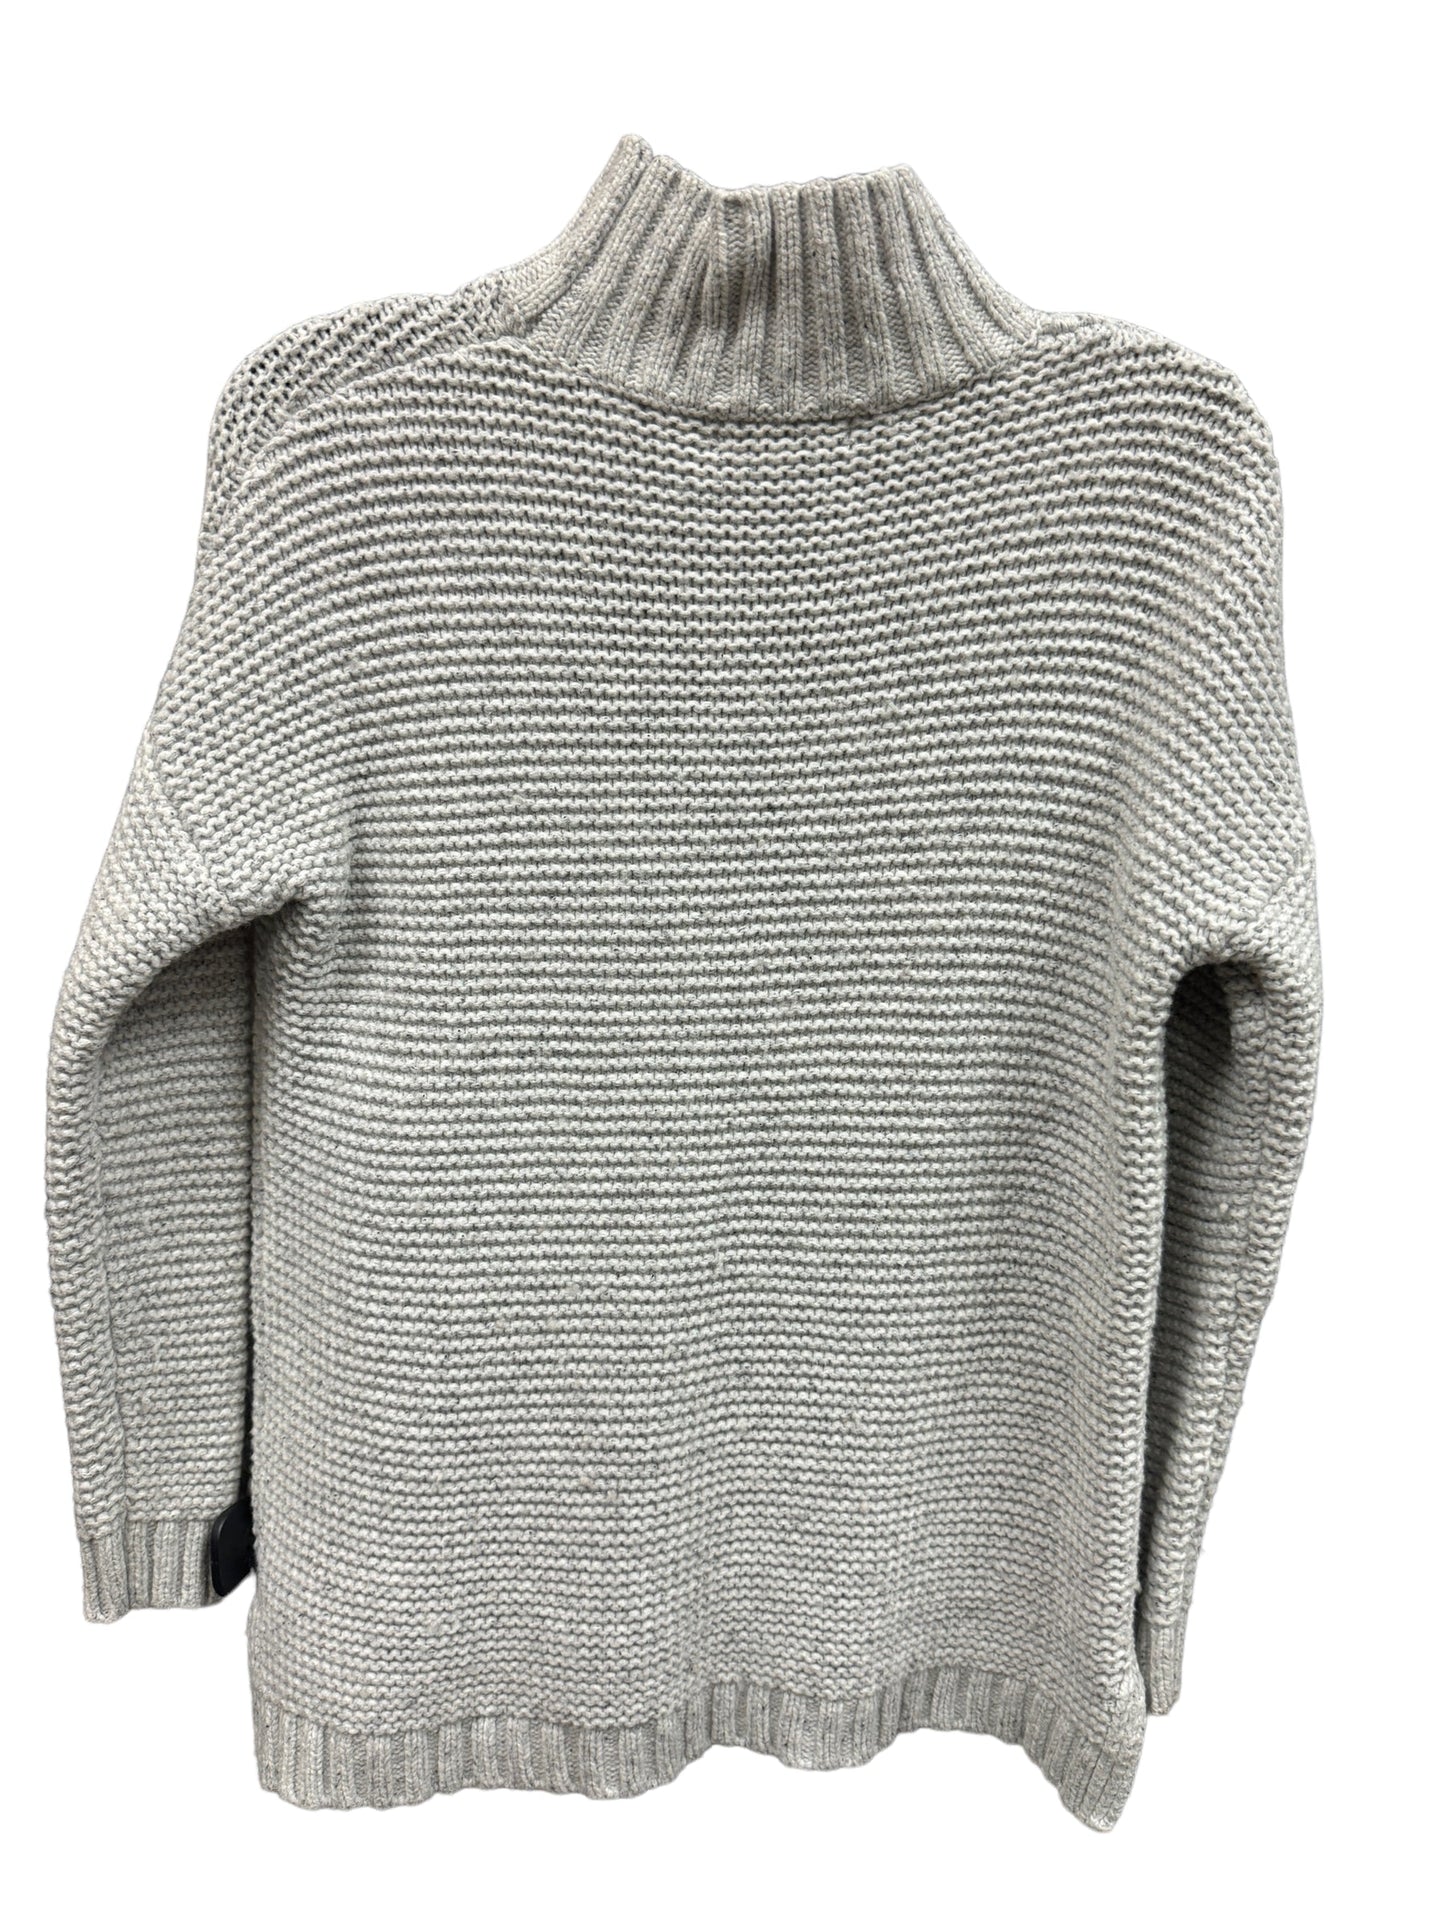 Sweater By Marine Layer  Size: Xs